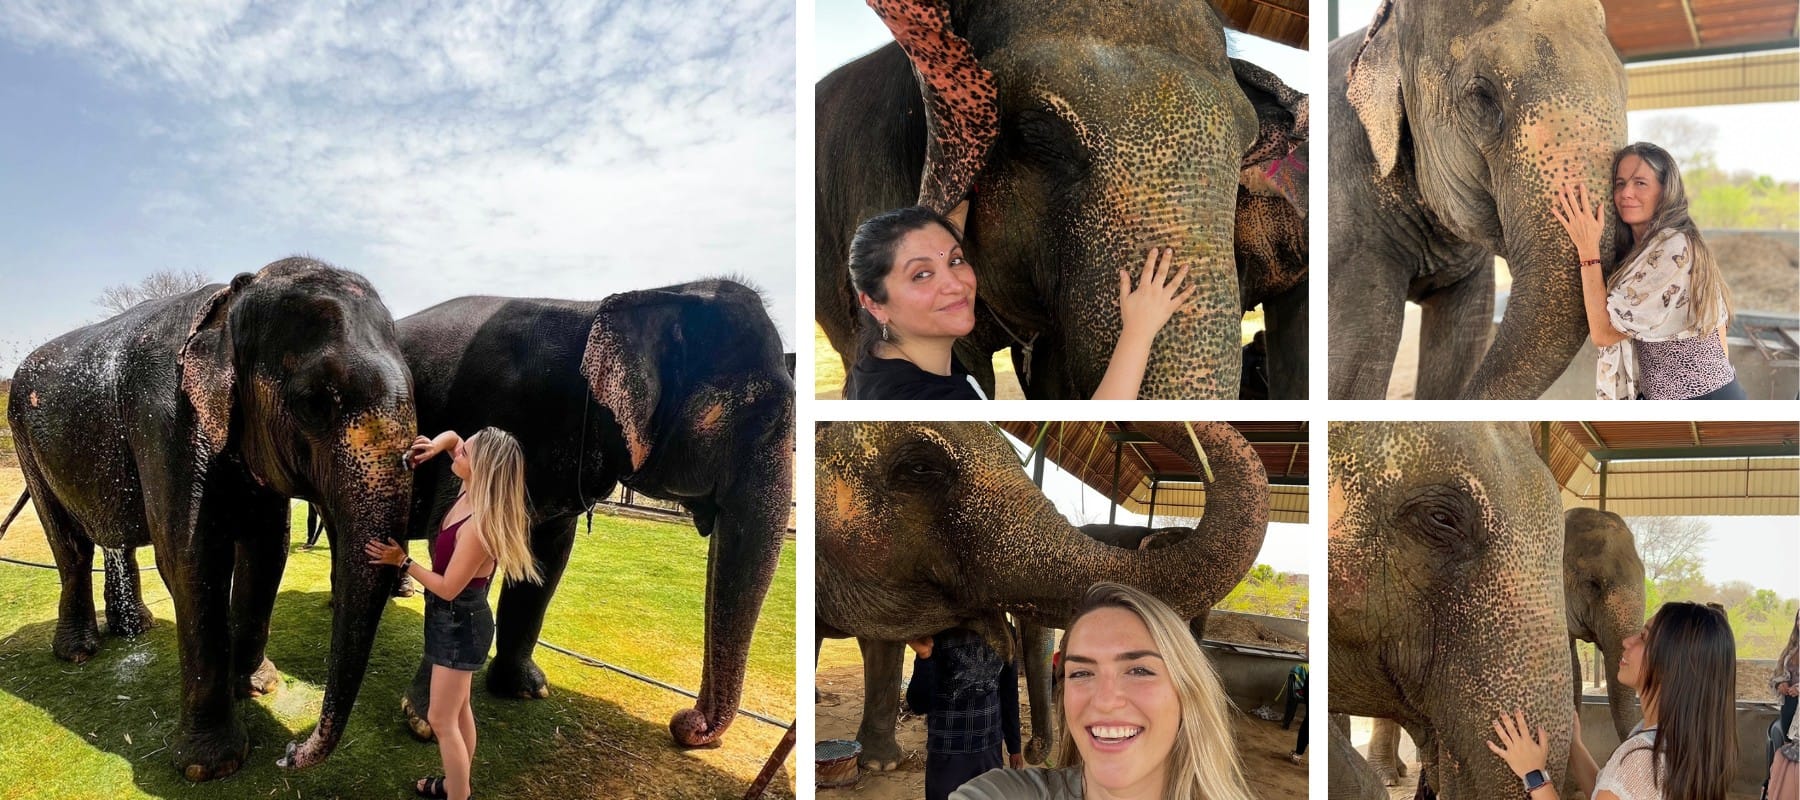 Elephant ride in jaipur